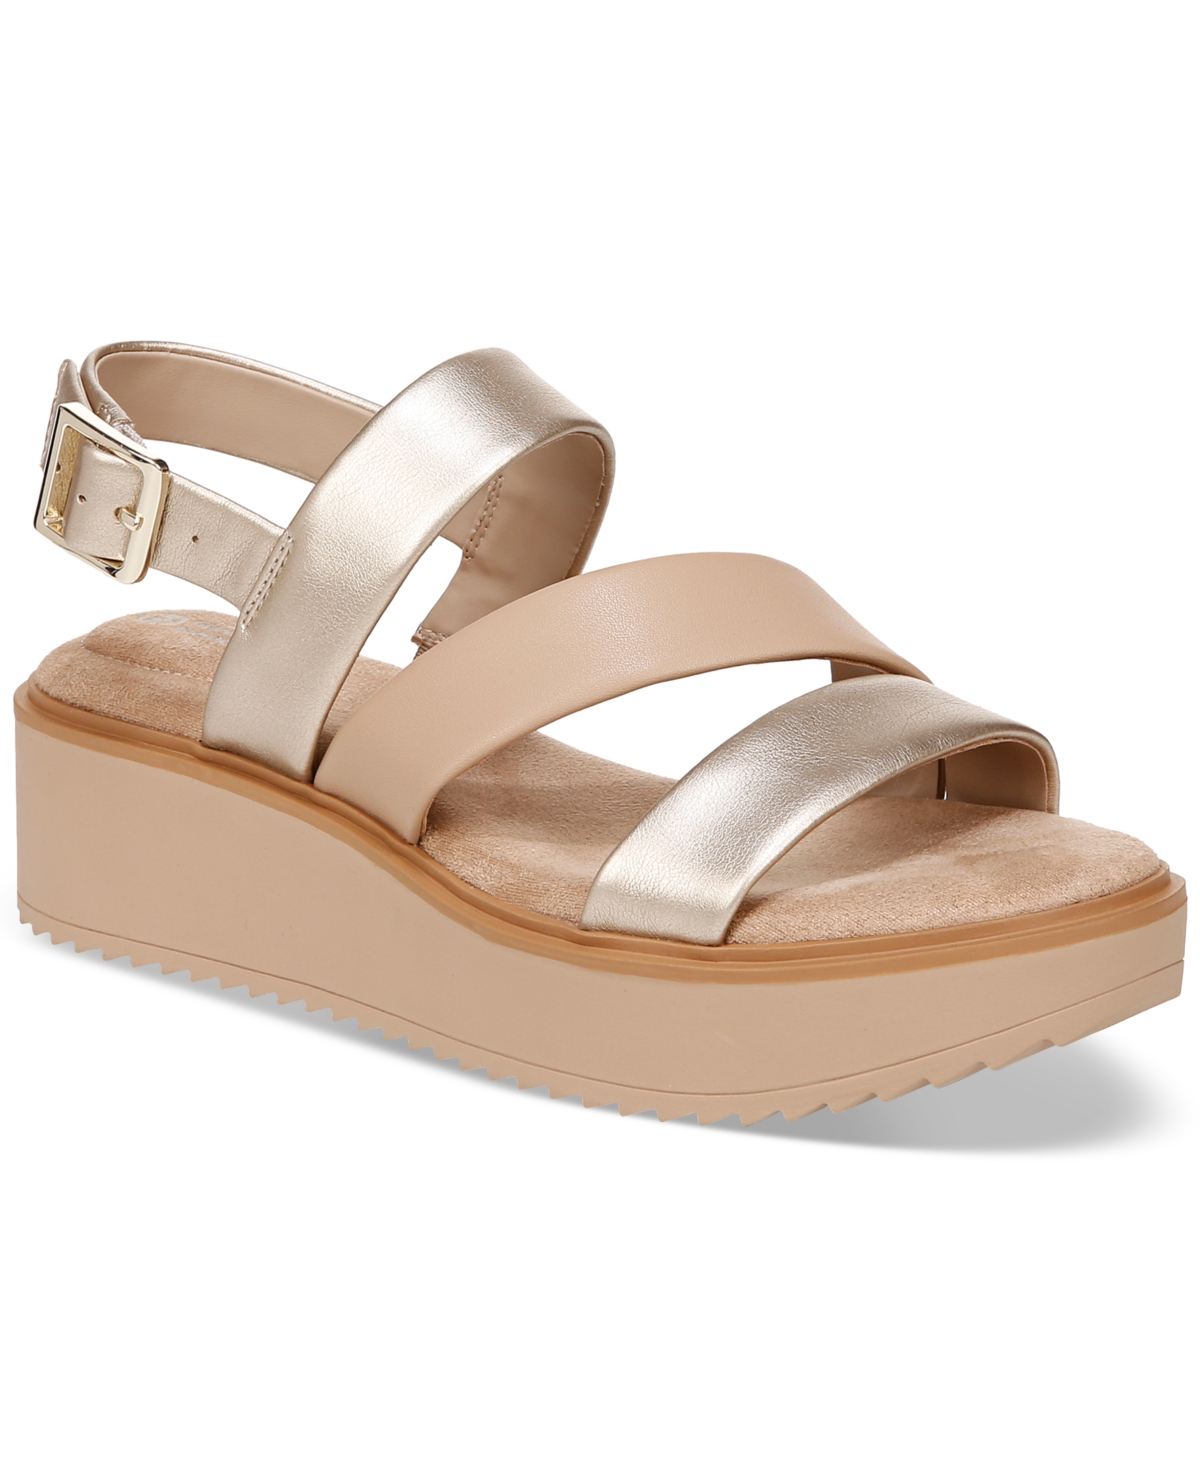 Women's Cessey Memory Foam Flatform Wedge Sandals, Created for Macy's - Platino